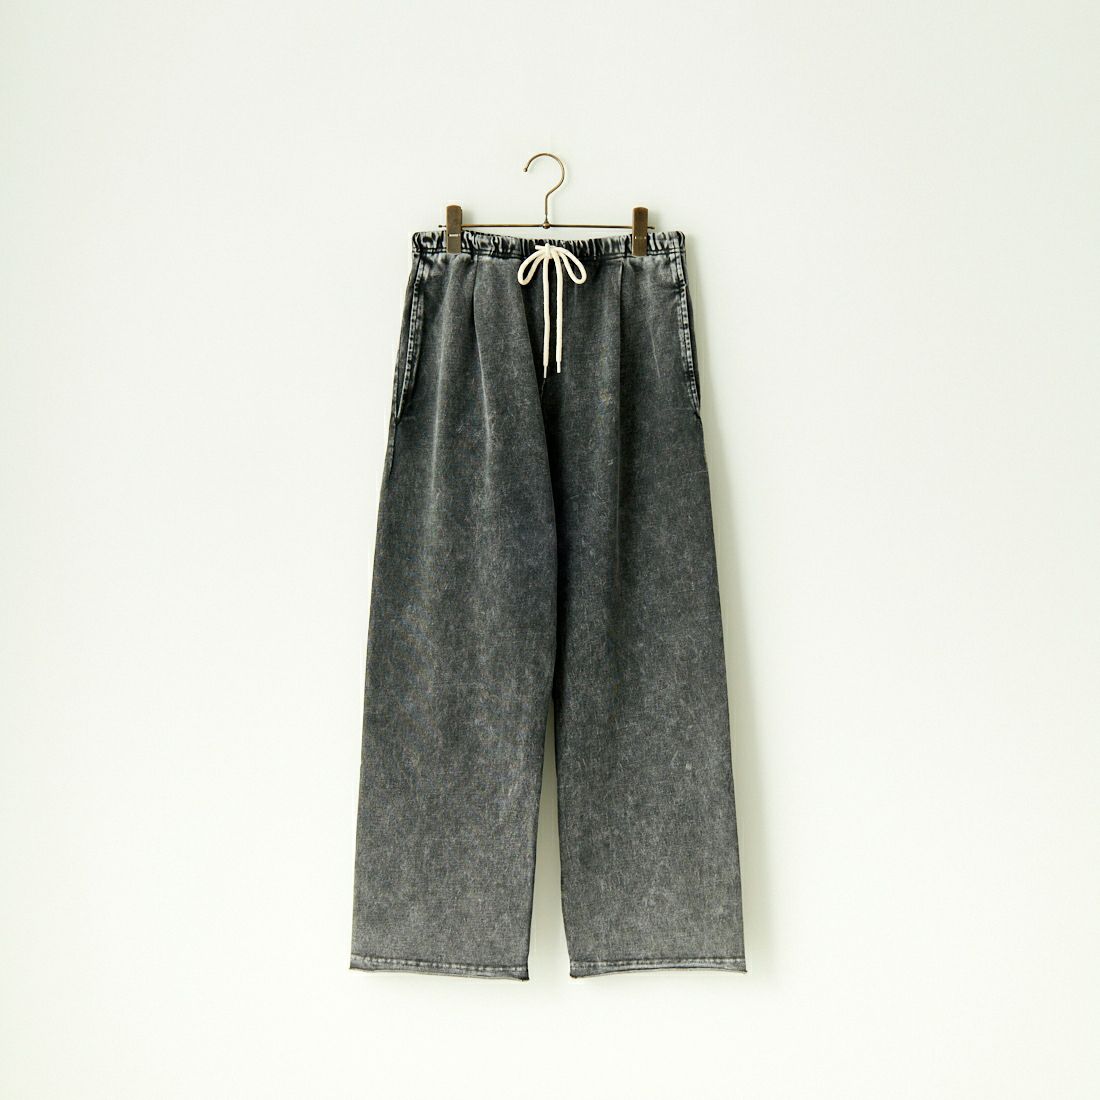 Jeans Factory Clothes [ジーンズファクトリークローズ] アシッド加工スウェットパンツ [2422-424IN] BLACK